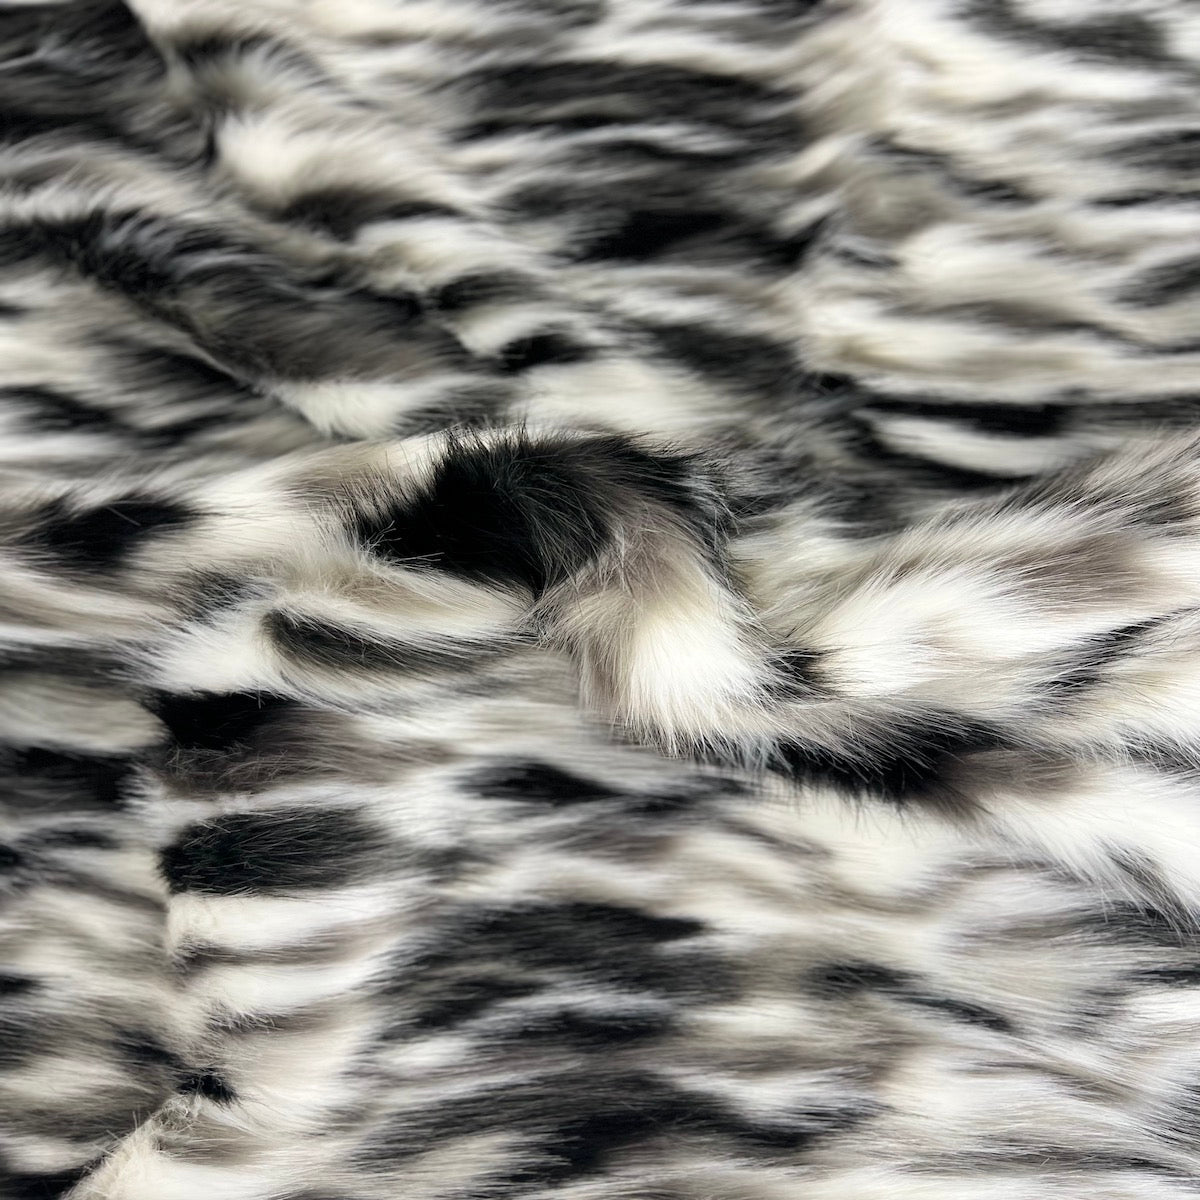 Tissu fausse fourrure Ysidro multicolore gris anthracite à poils longs 